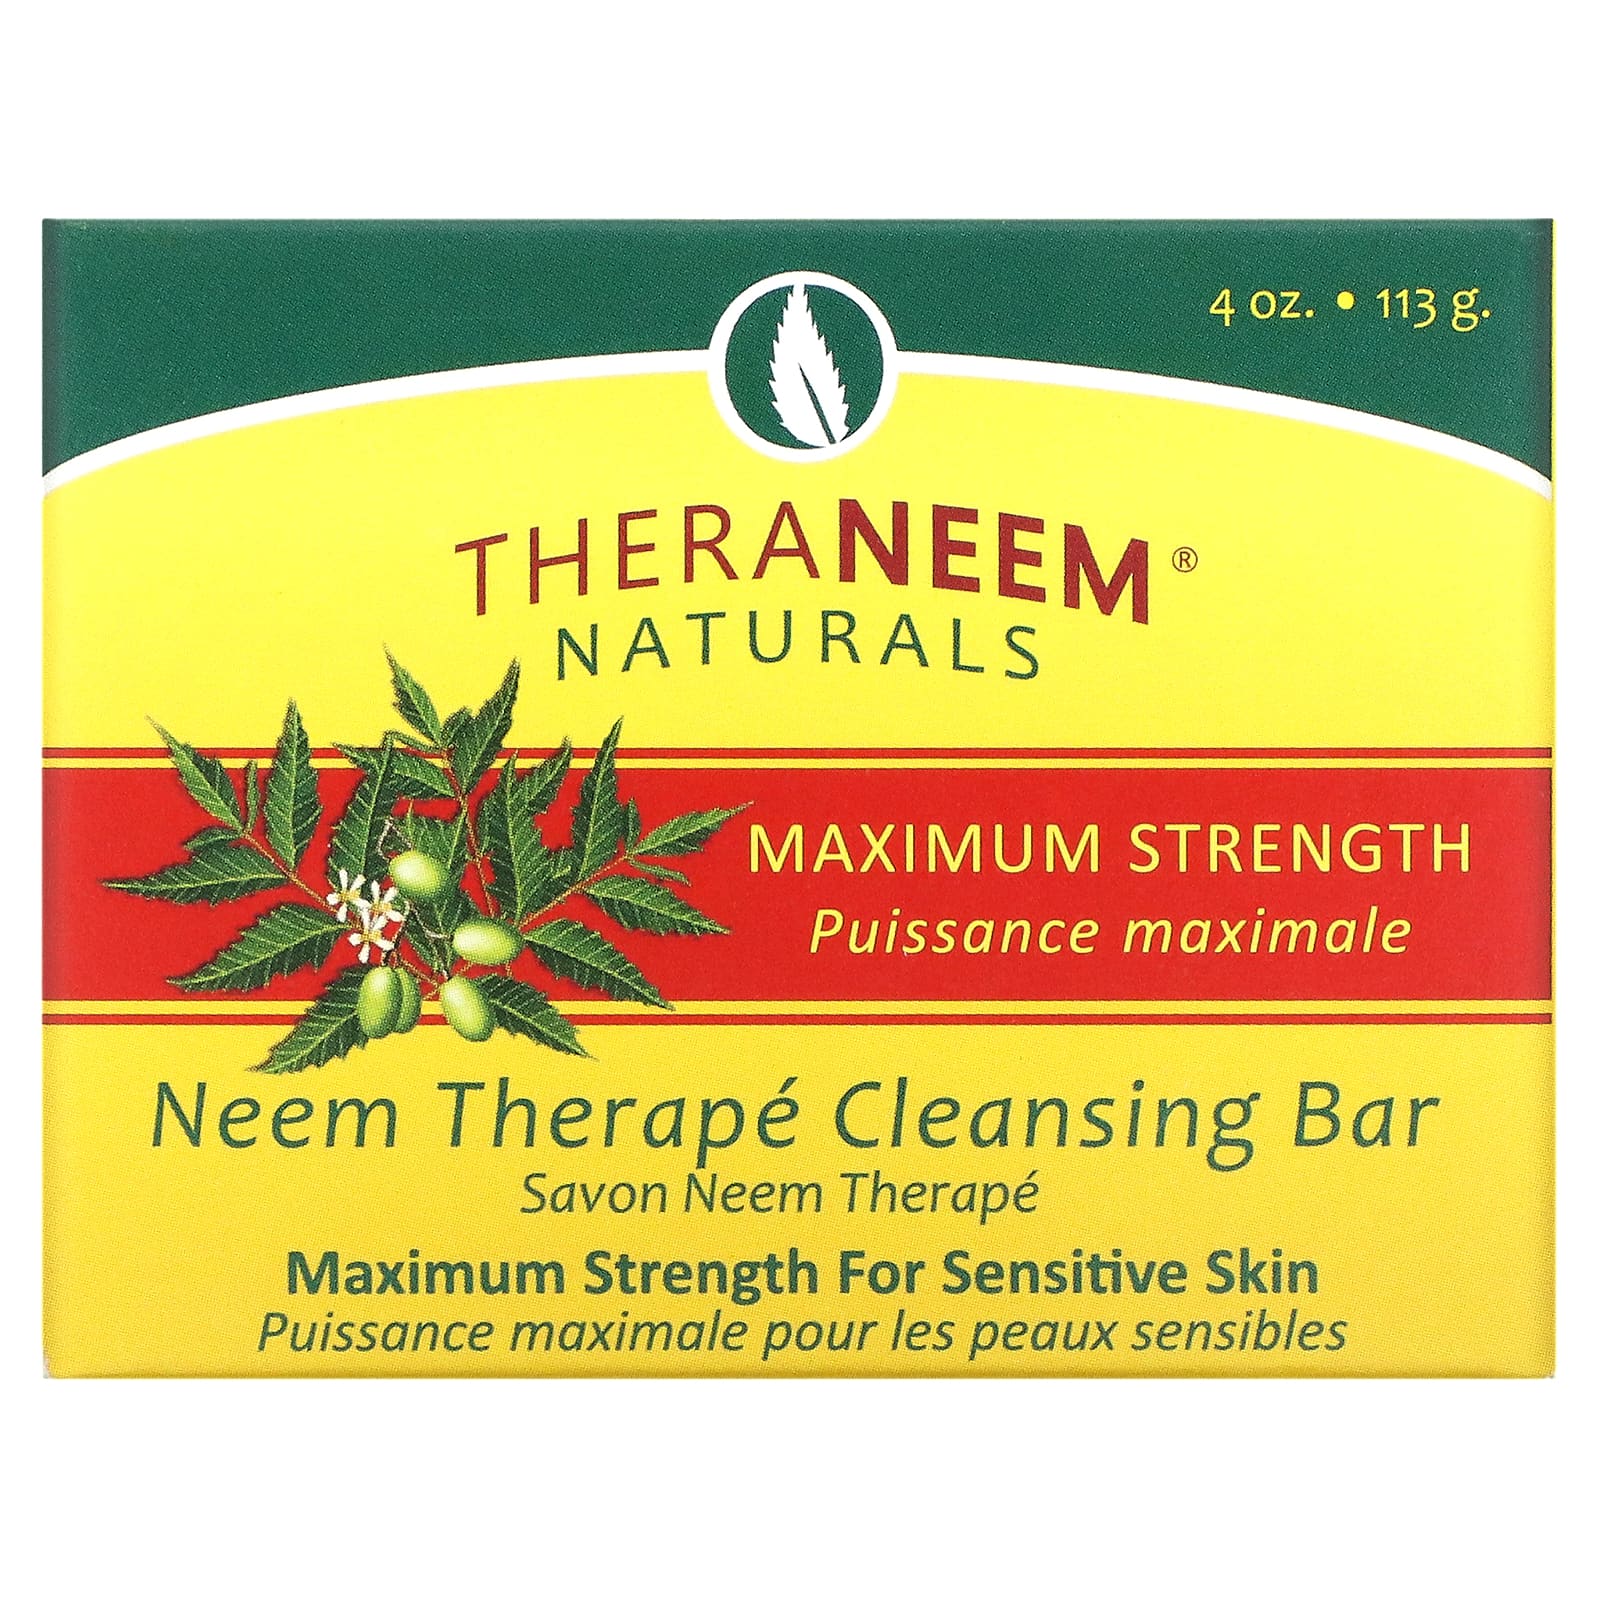 Organix South TheraNeem Organix Neem Therapy Cleansing Bar Maximum Strength 4 oz (113 g) очищающий батончик organix south theraneem naturals neem therapé с овсянкой и лавандой 113 г